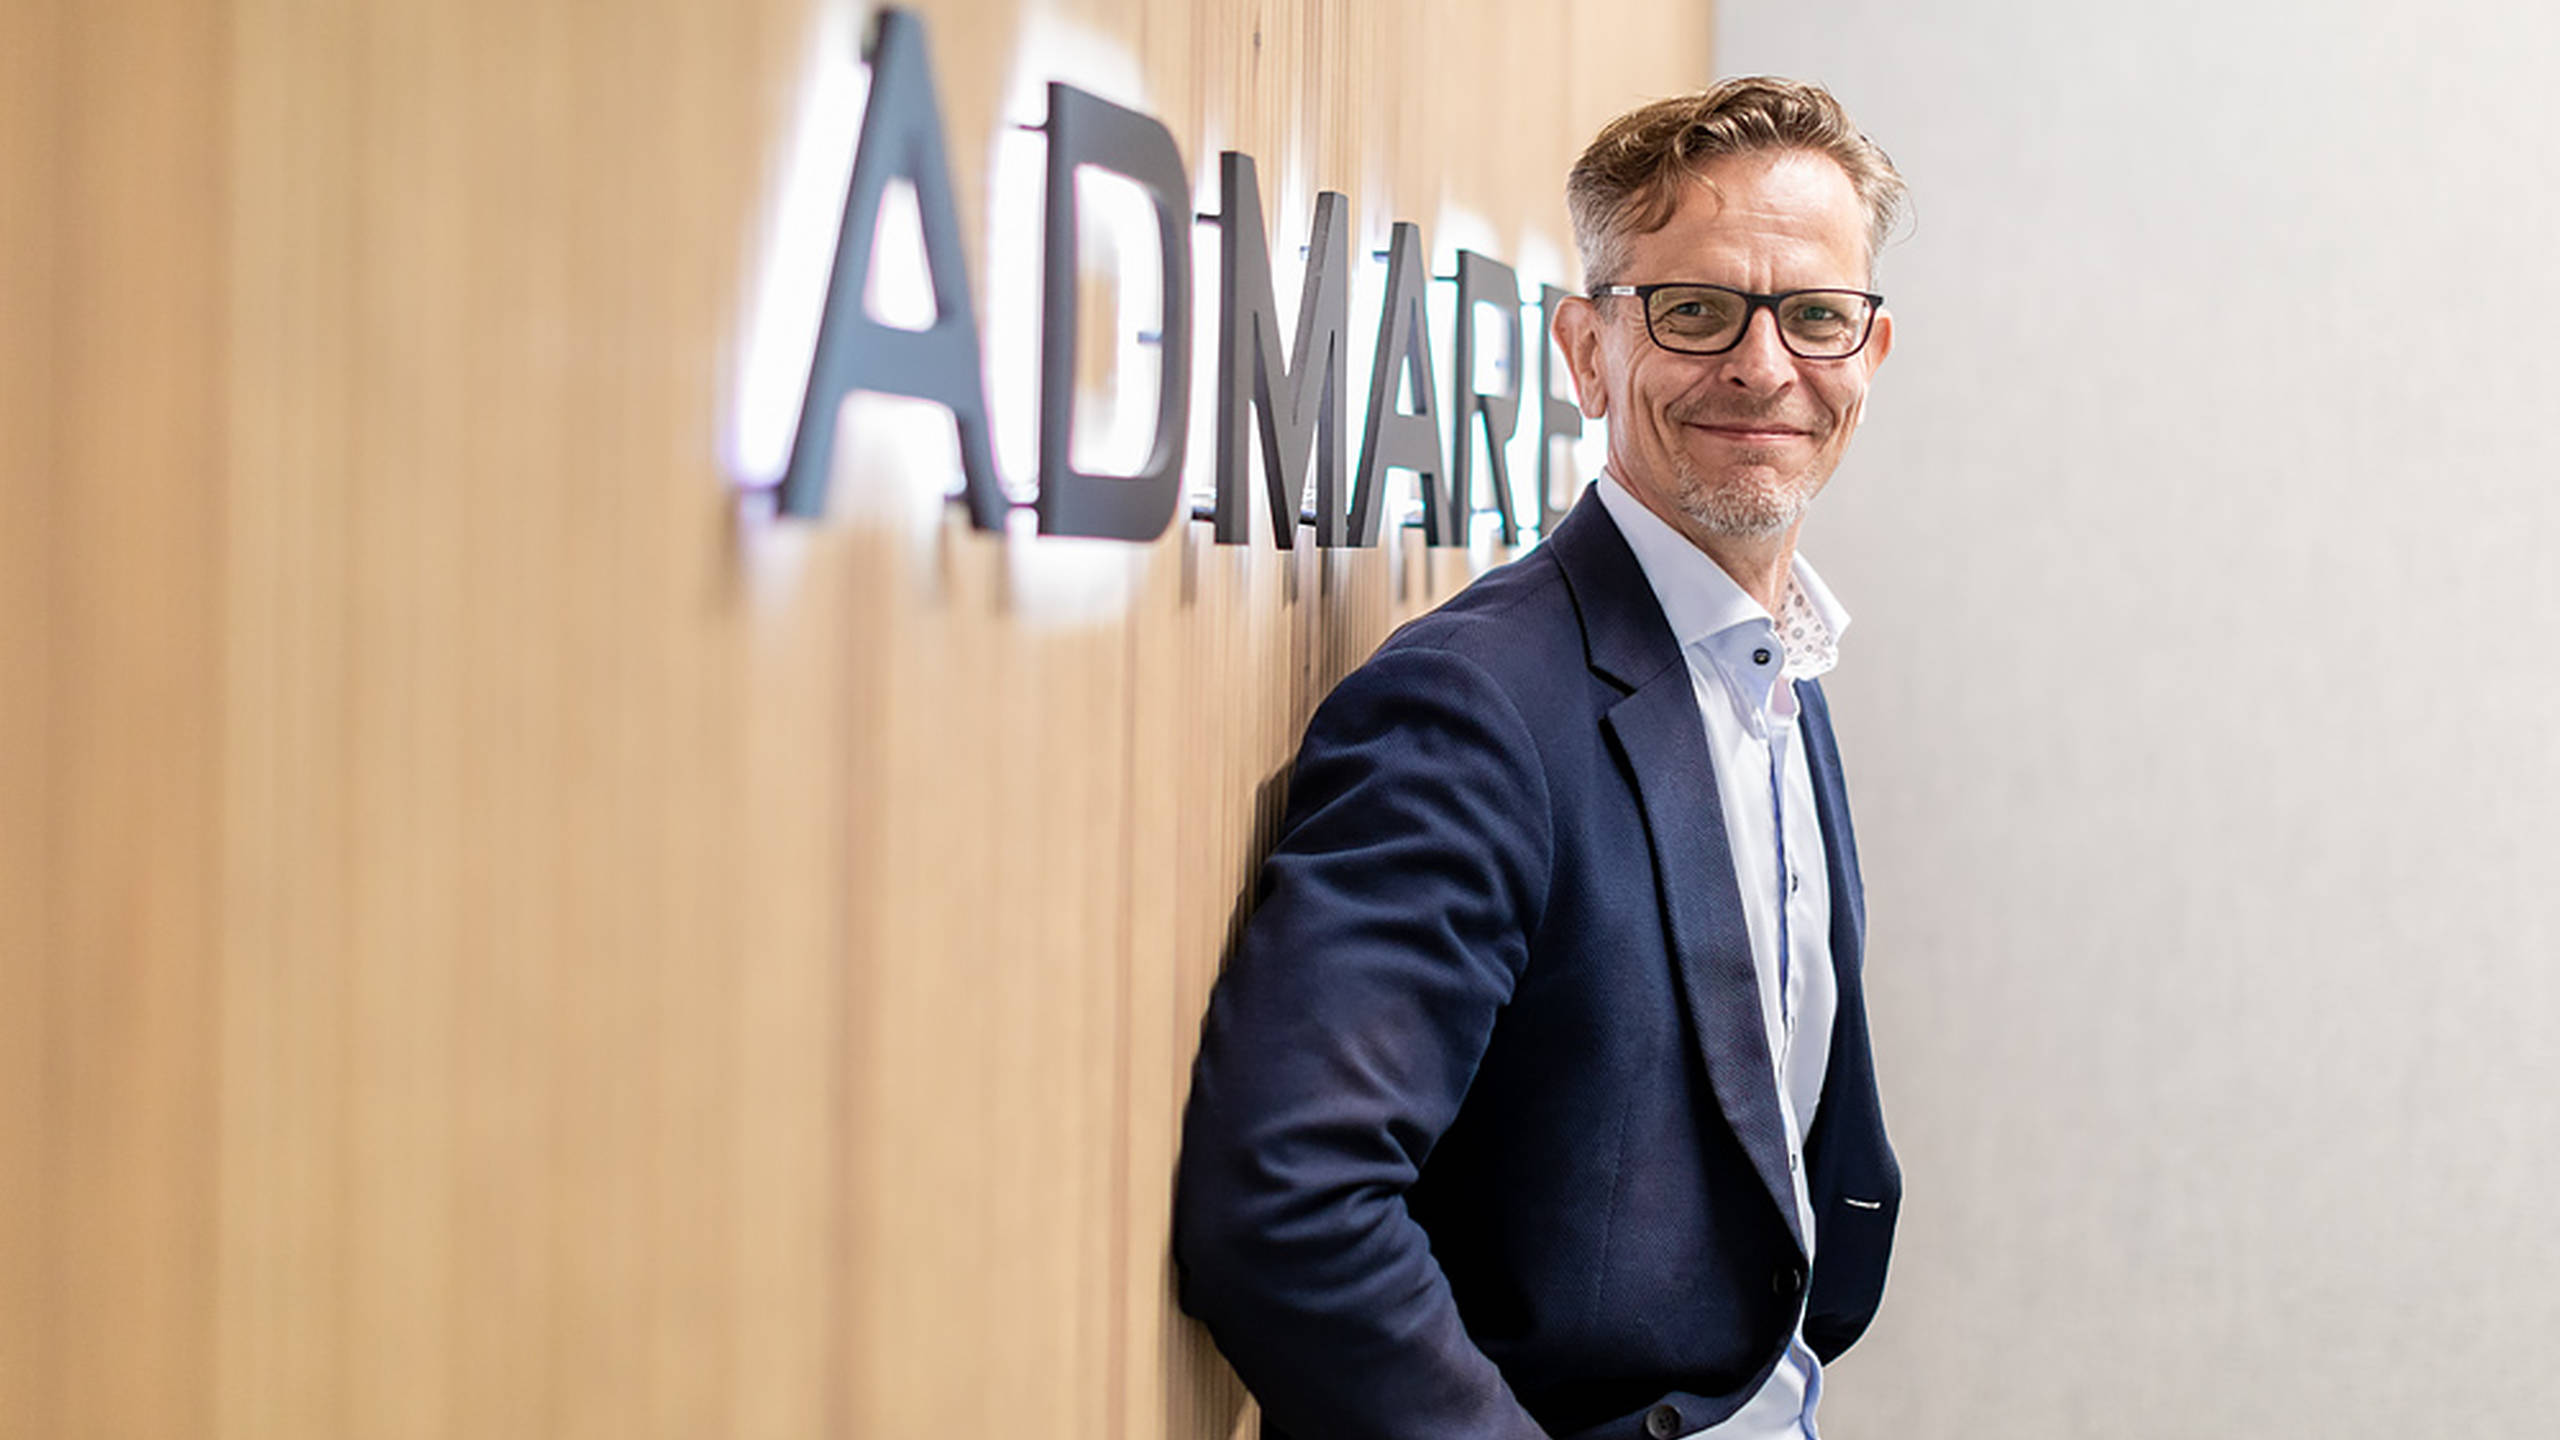 Juha Kuokkanen Joins ADMARES Finland as Managing Director, Bringing Leadership Expertise to Drive Growth